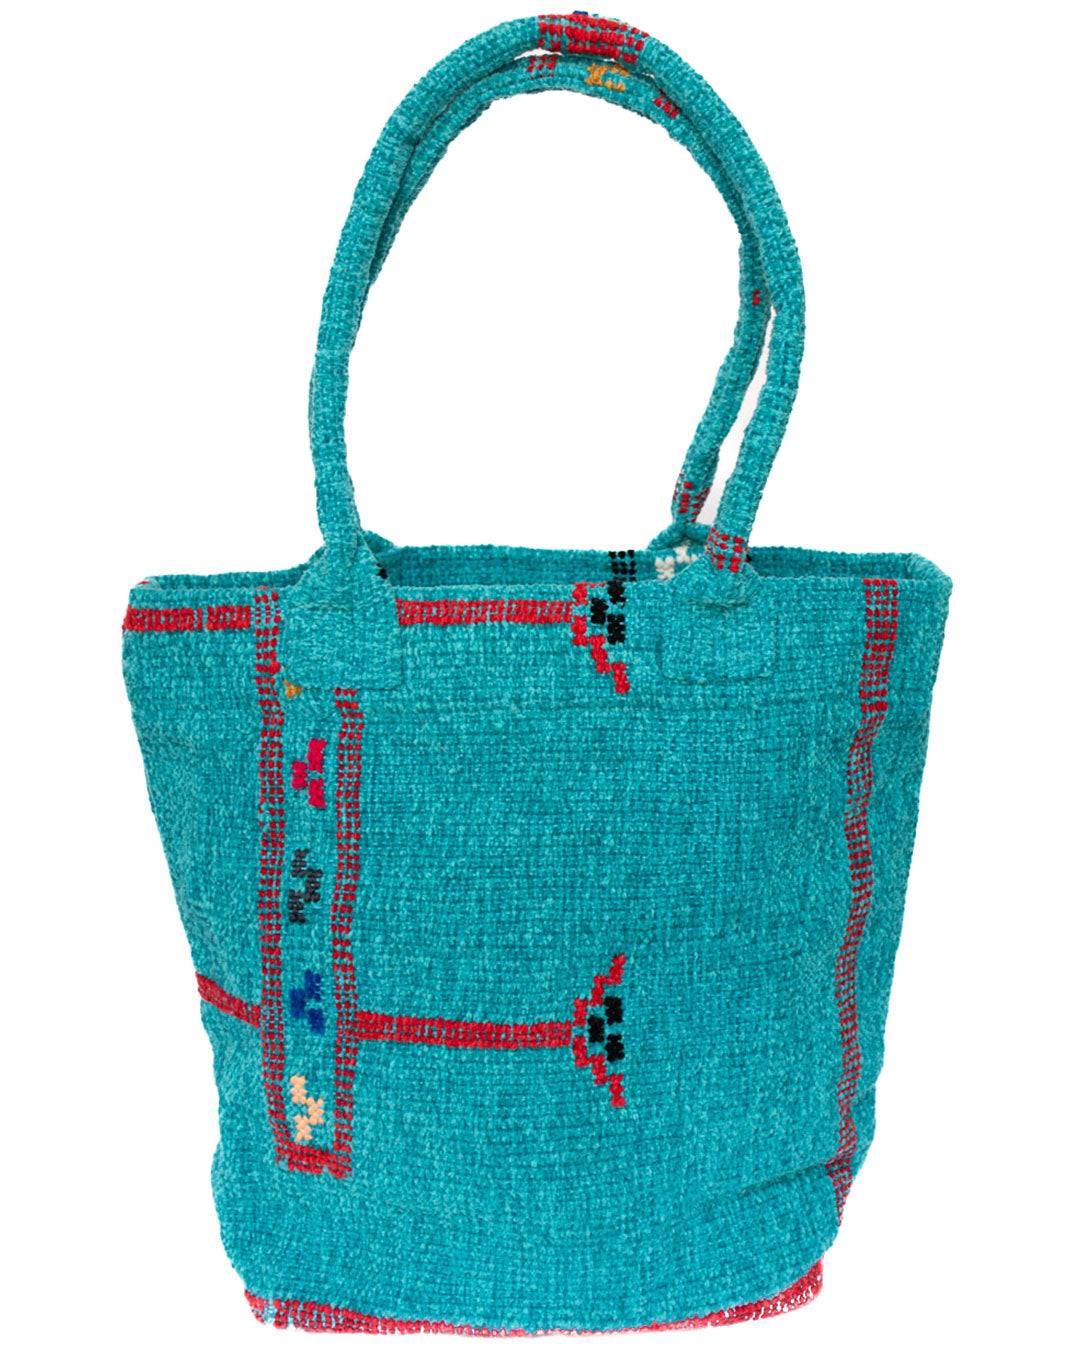 IFULKKI Tote Bag Turquoise